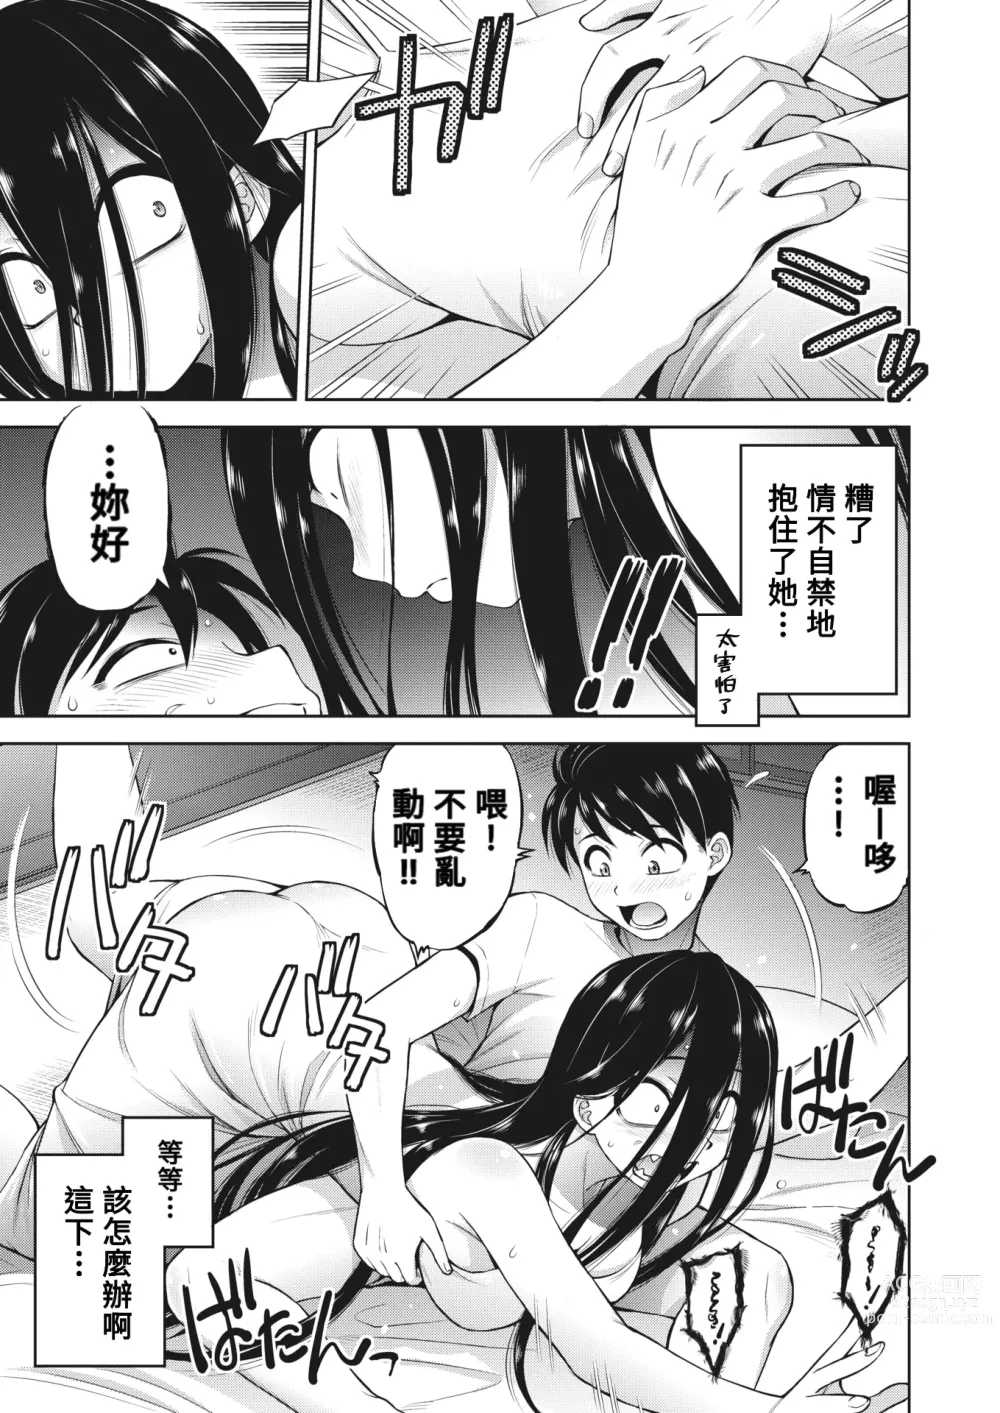 Page 7 of manga Oshiire Kaikitan